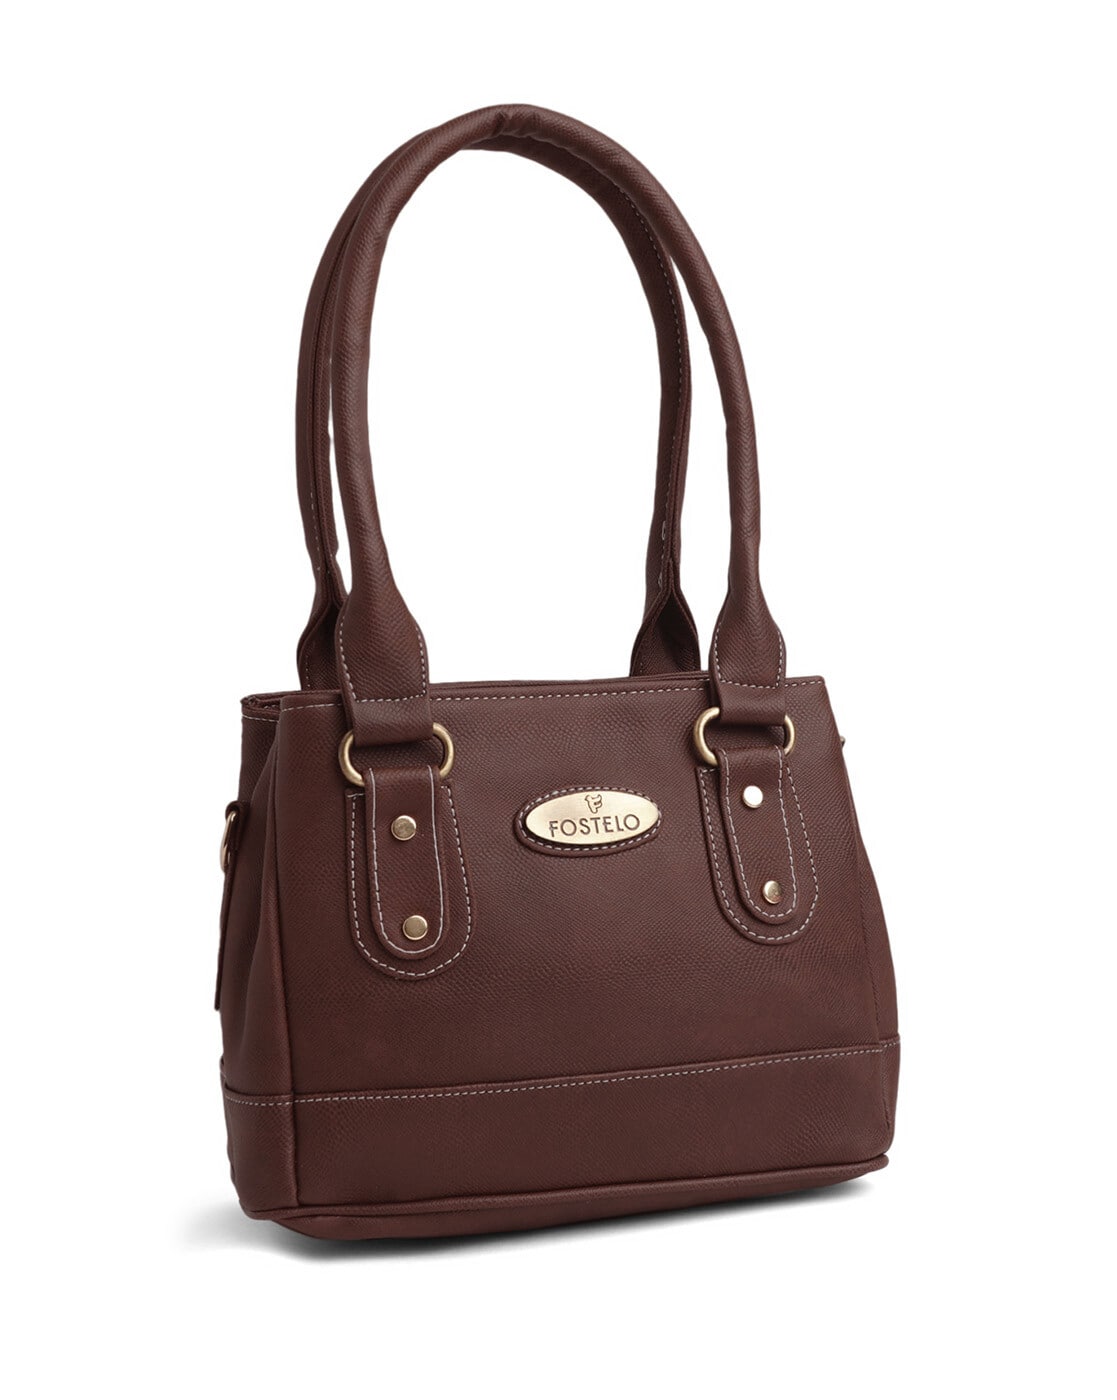 HandBags - Buy Bags Starts Rs.128 Online at Best Prices in India - Flipkart .com